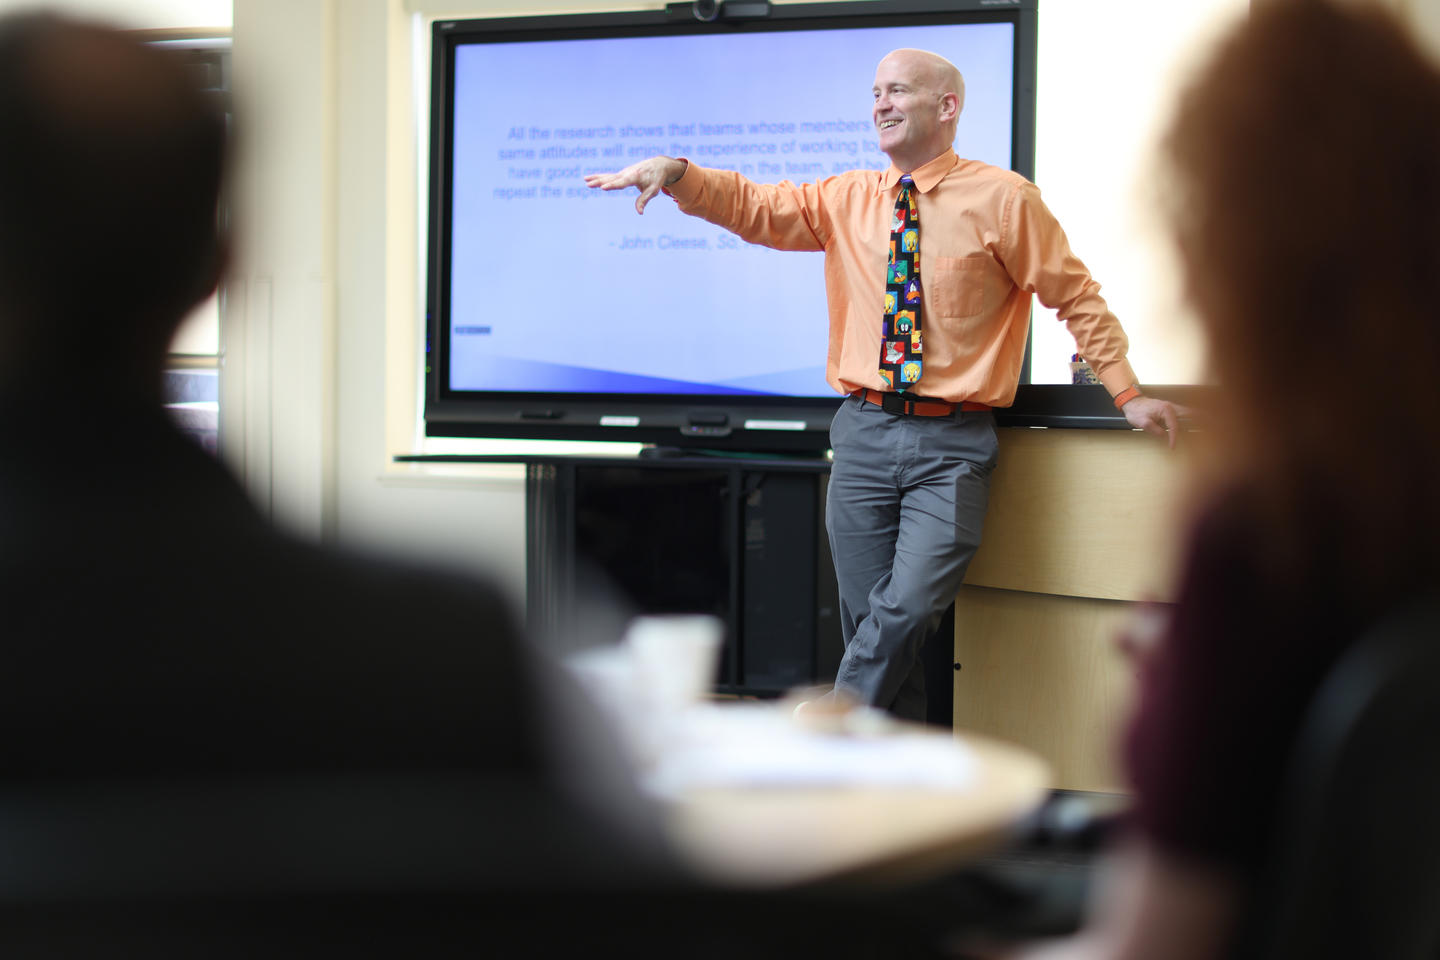 Professor teaching an executive education class